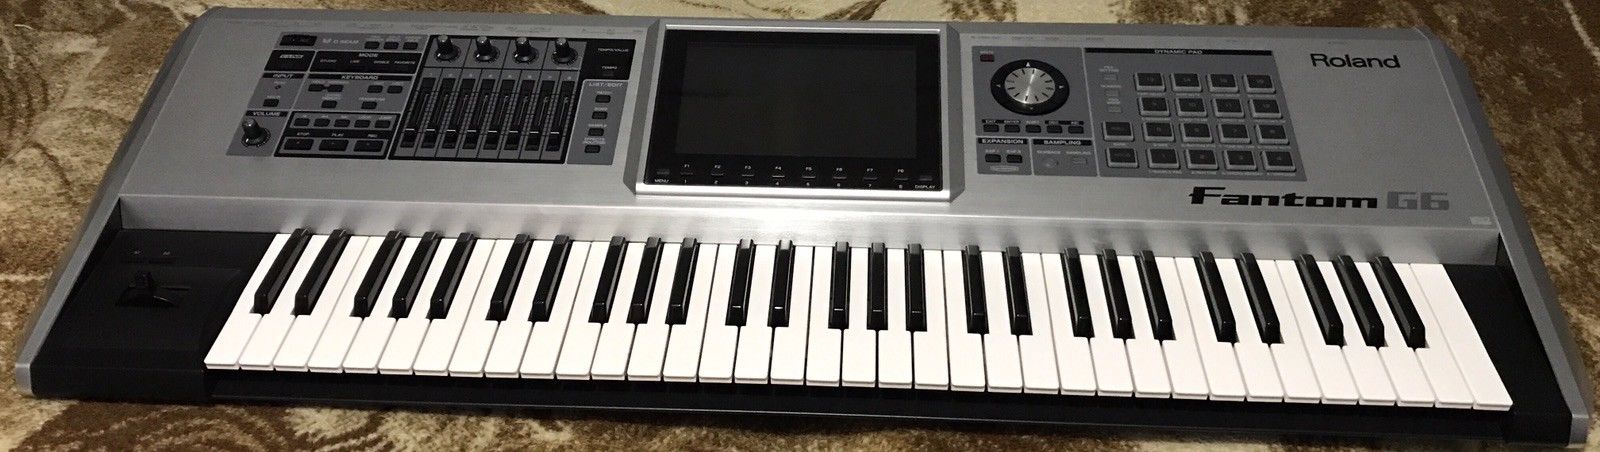 Roland Fantom-G6 Keyboard Synthesizer